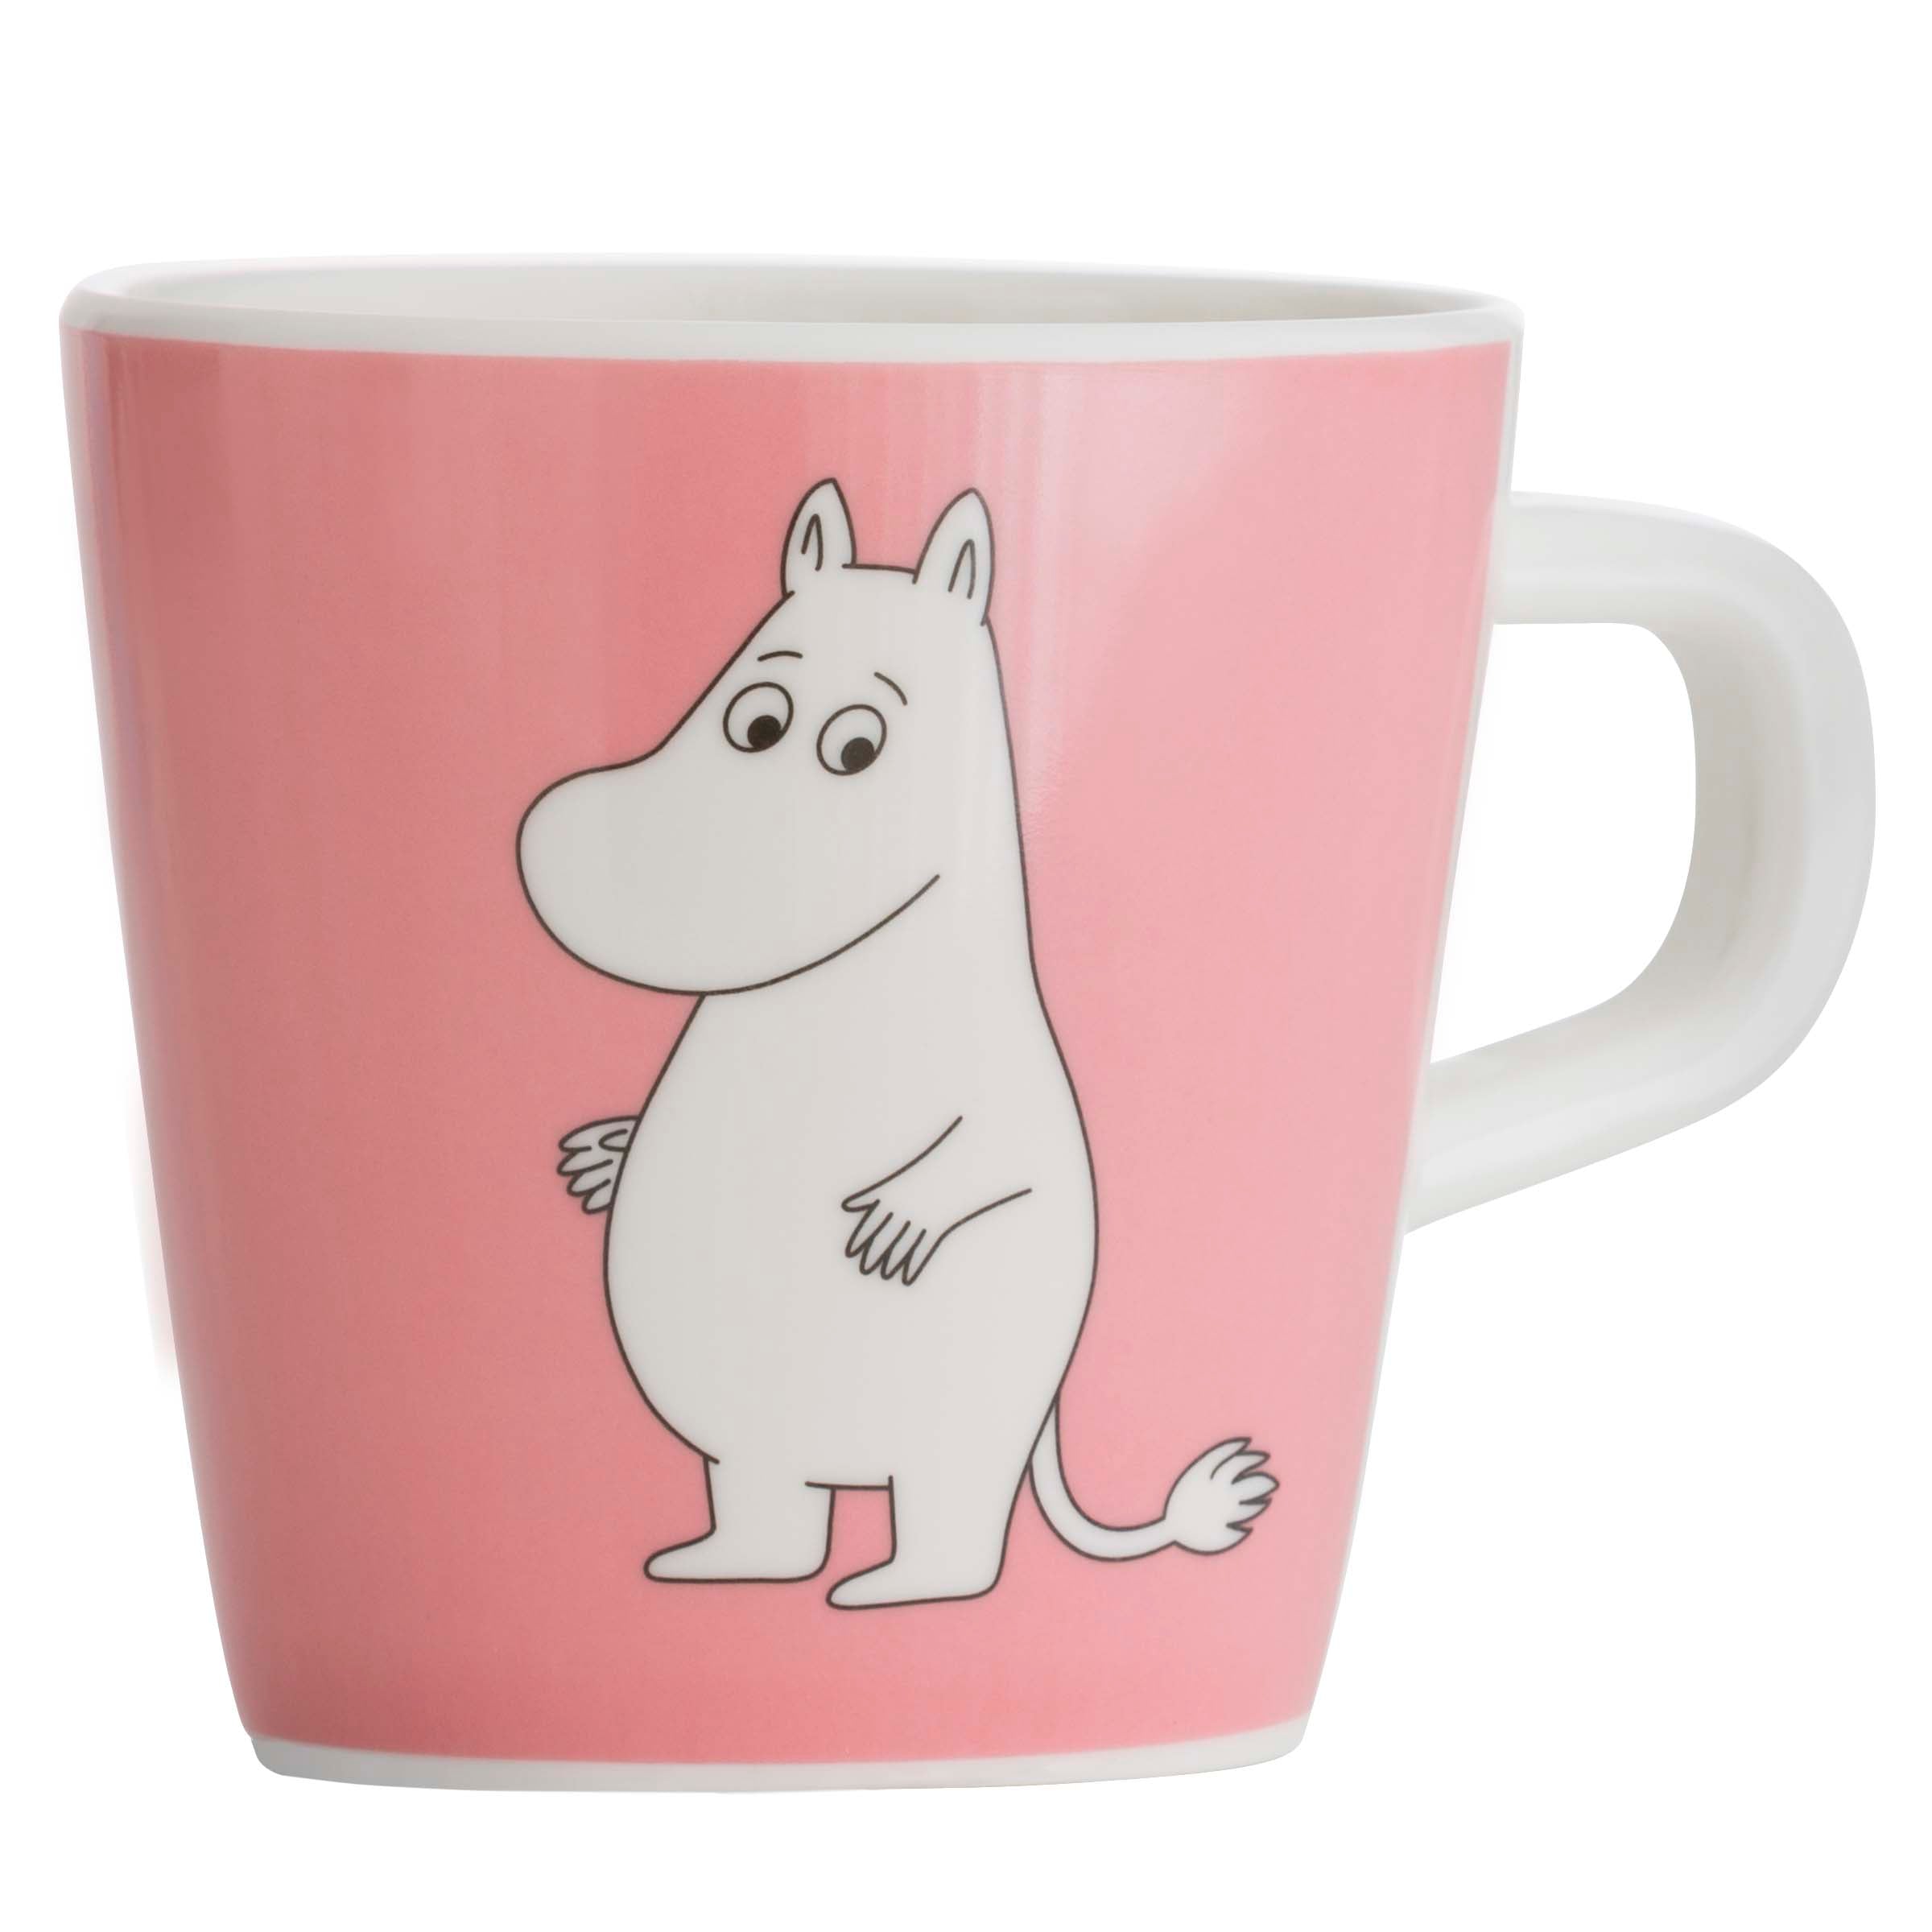 Moomin mug "Water & Bath", pink